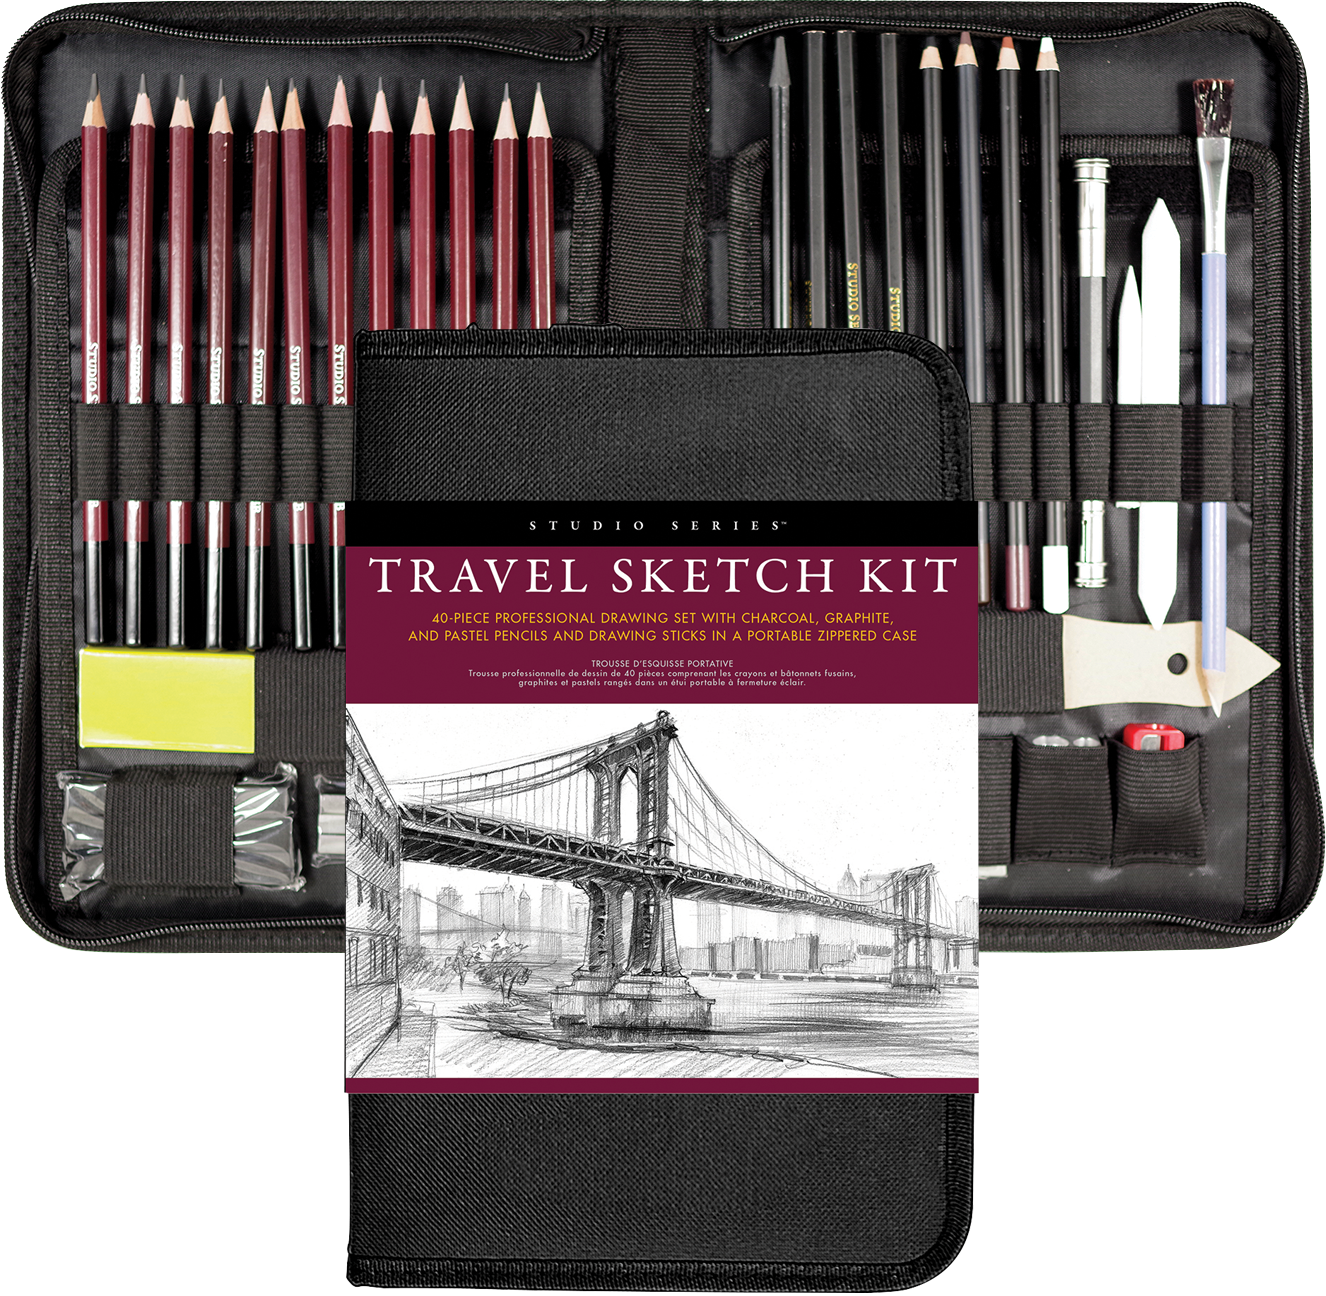 Studio Series Travel Sketch Kit – Peter Pauper Press